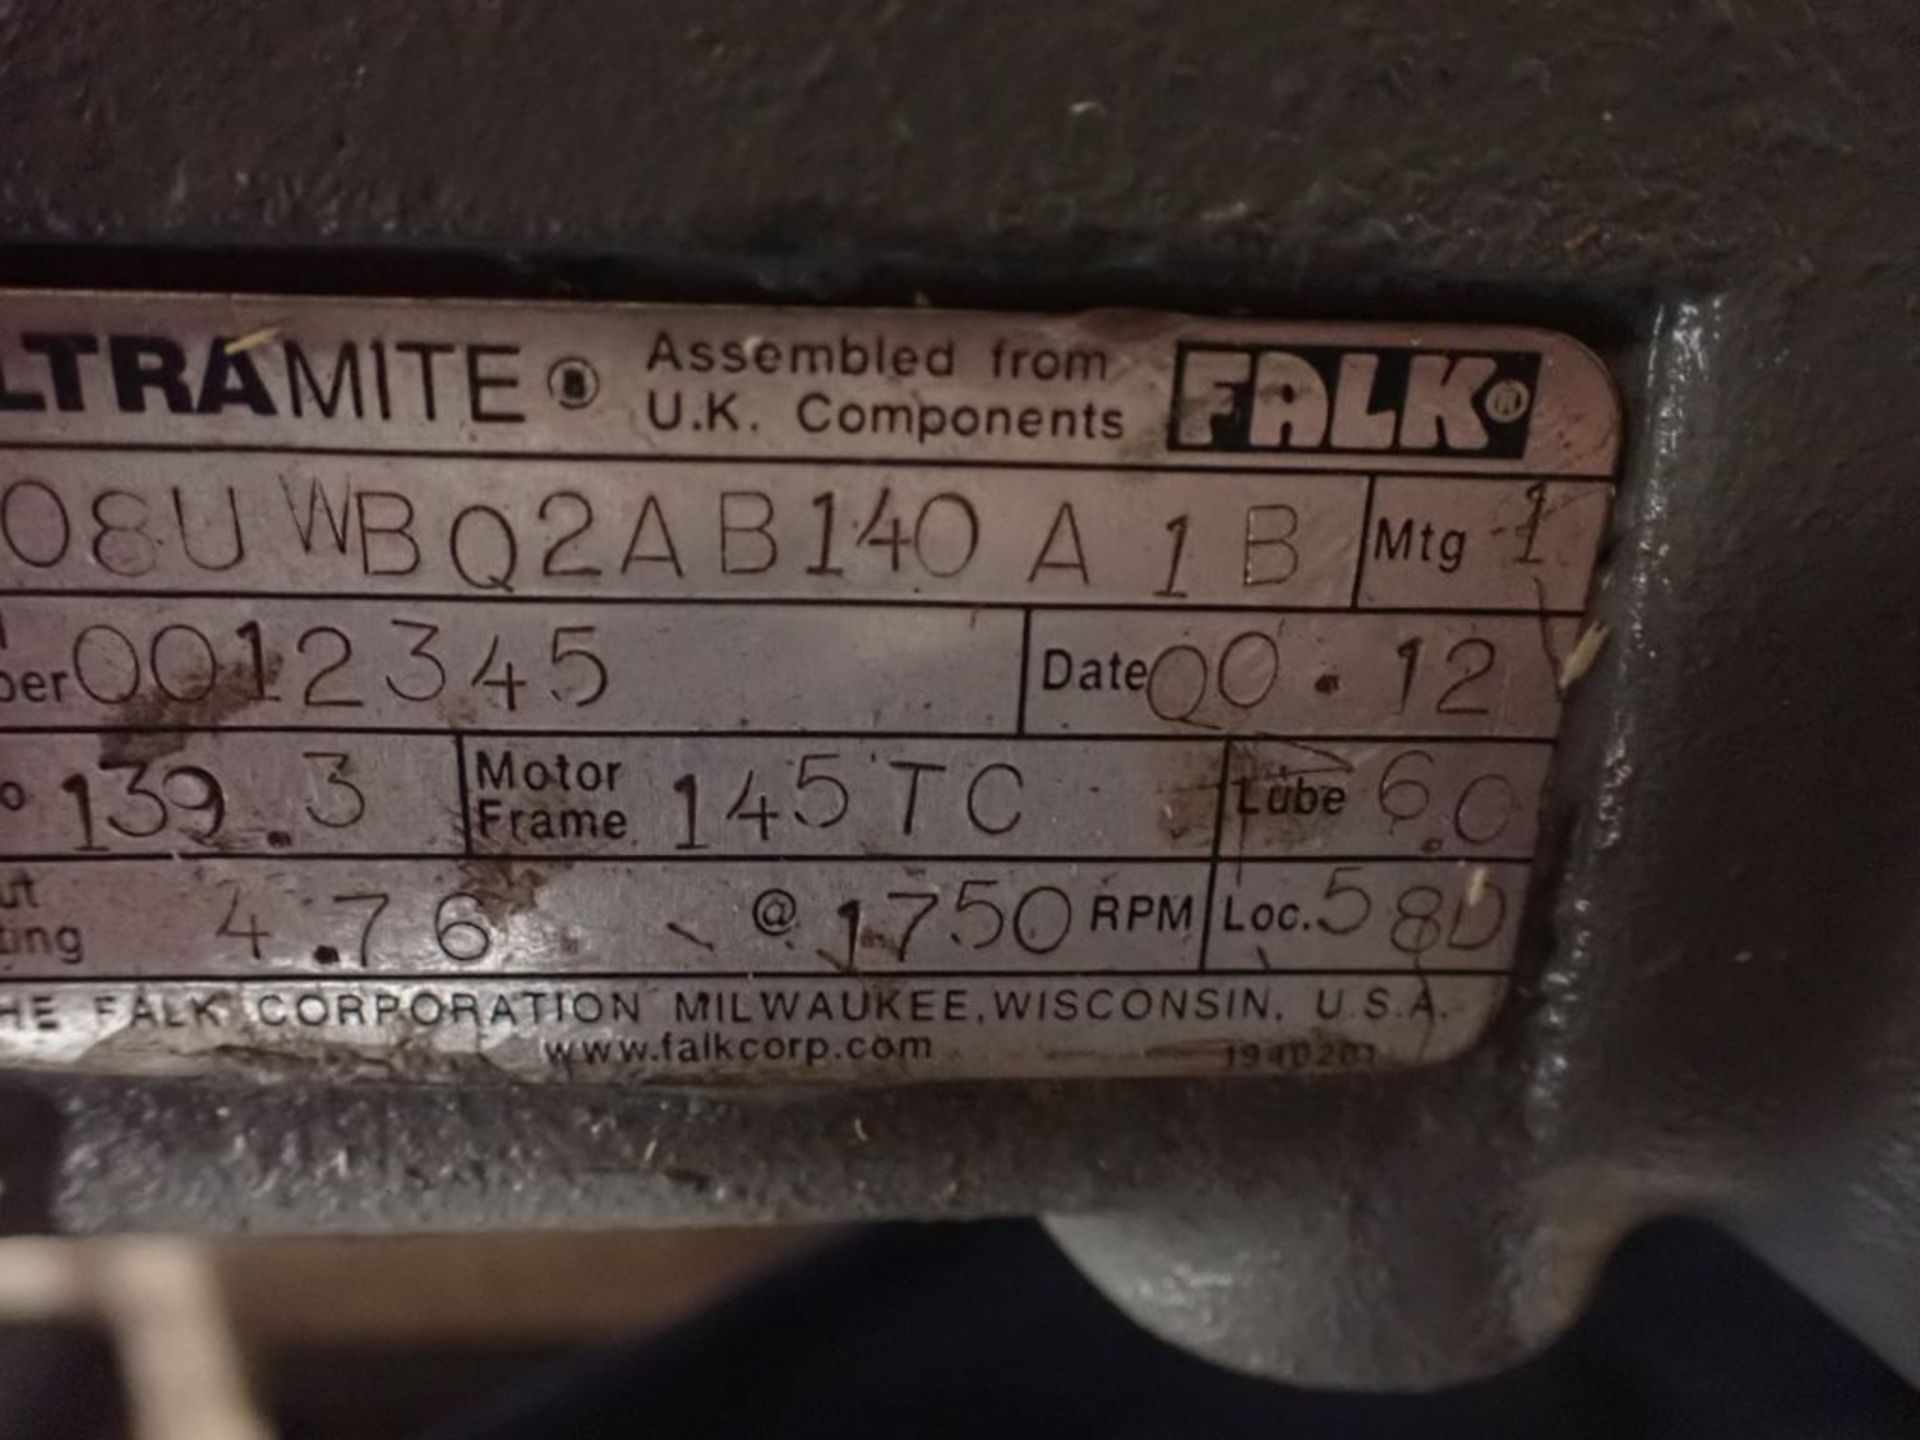 Falk Ultramite Gear Drive - Serial No. 0012345; Model No. 08UWB02AB140 A 1B; 139.3 Ratio; Tag: - Image 12 of 12